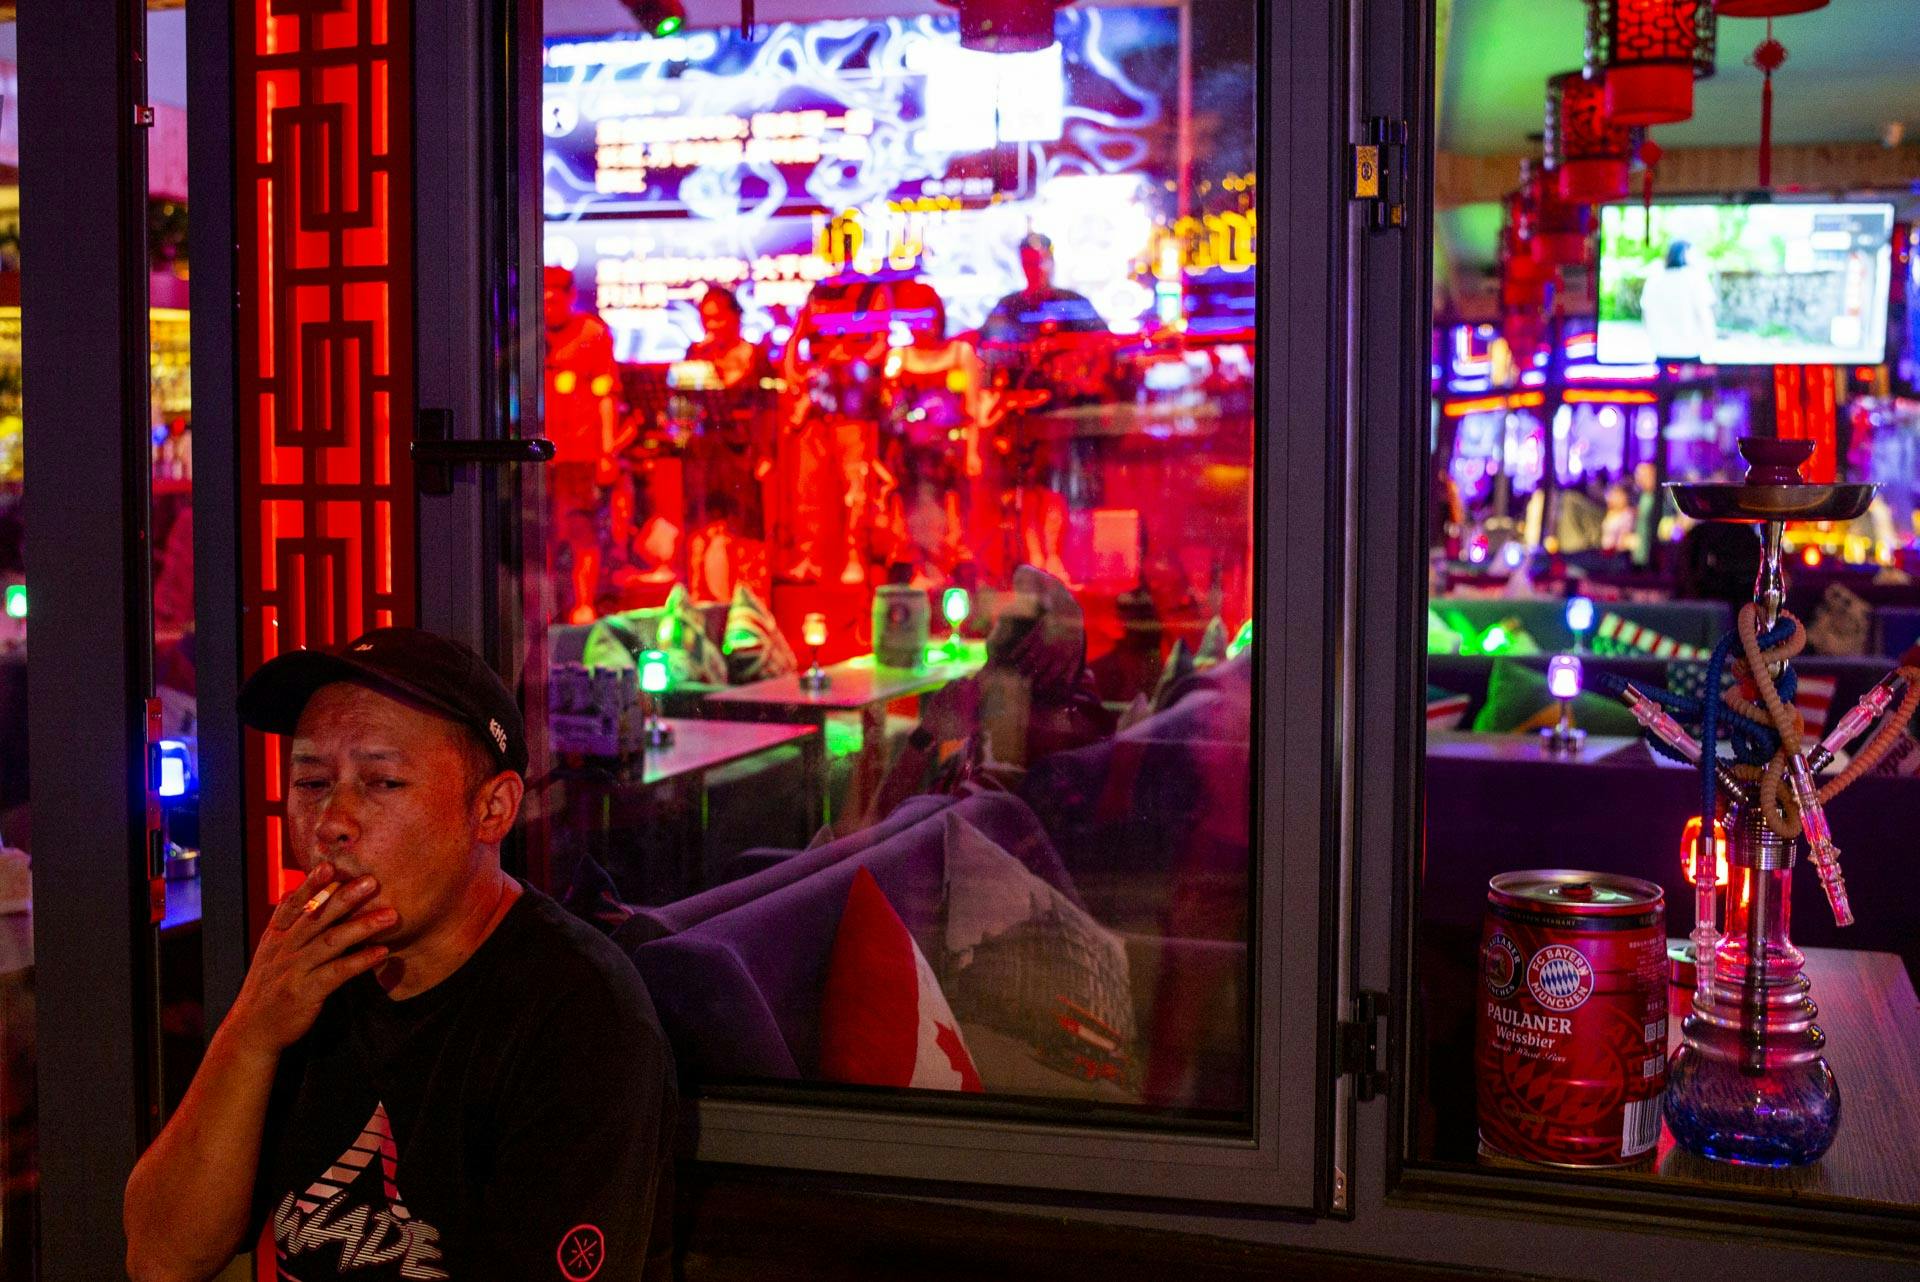 A man smokes a cigarette in the Shizahai bar area in Beijing, China